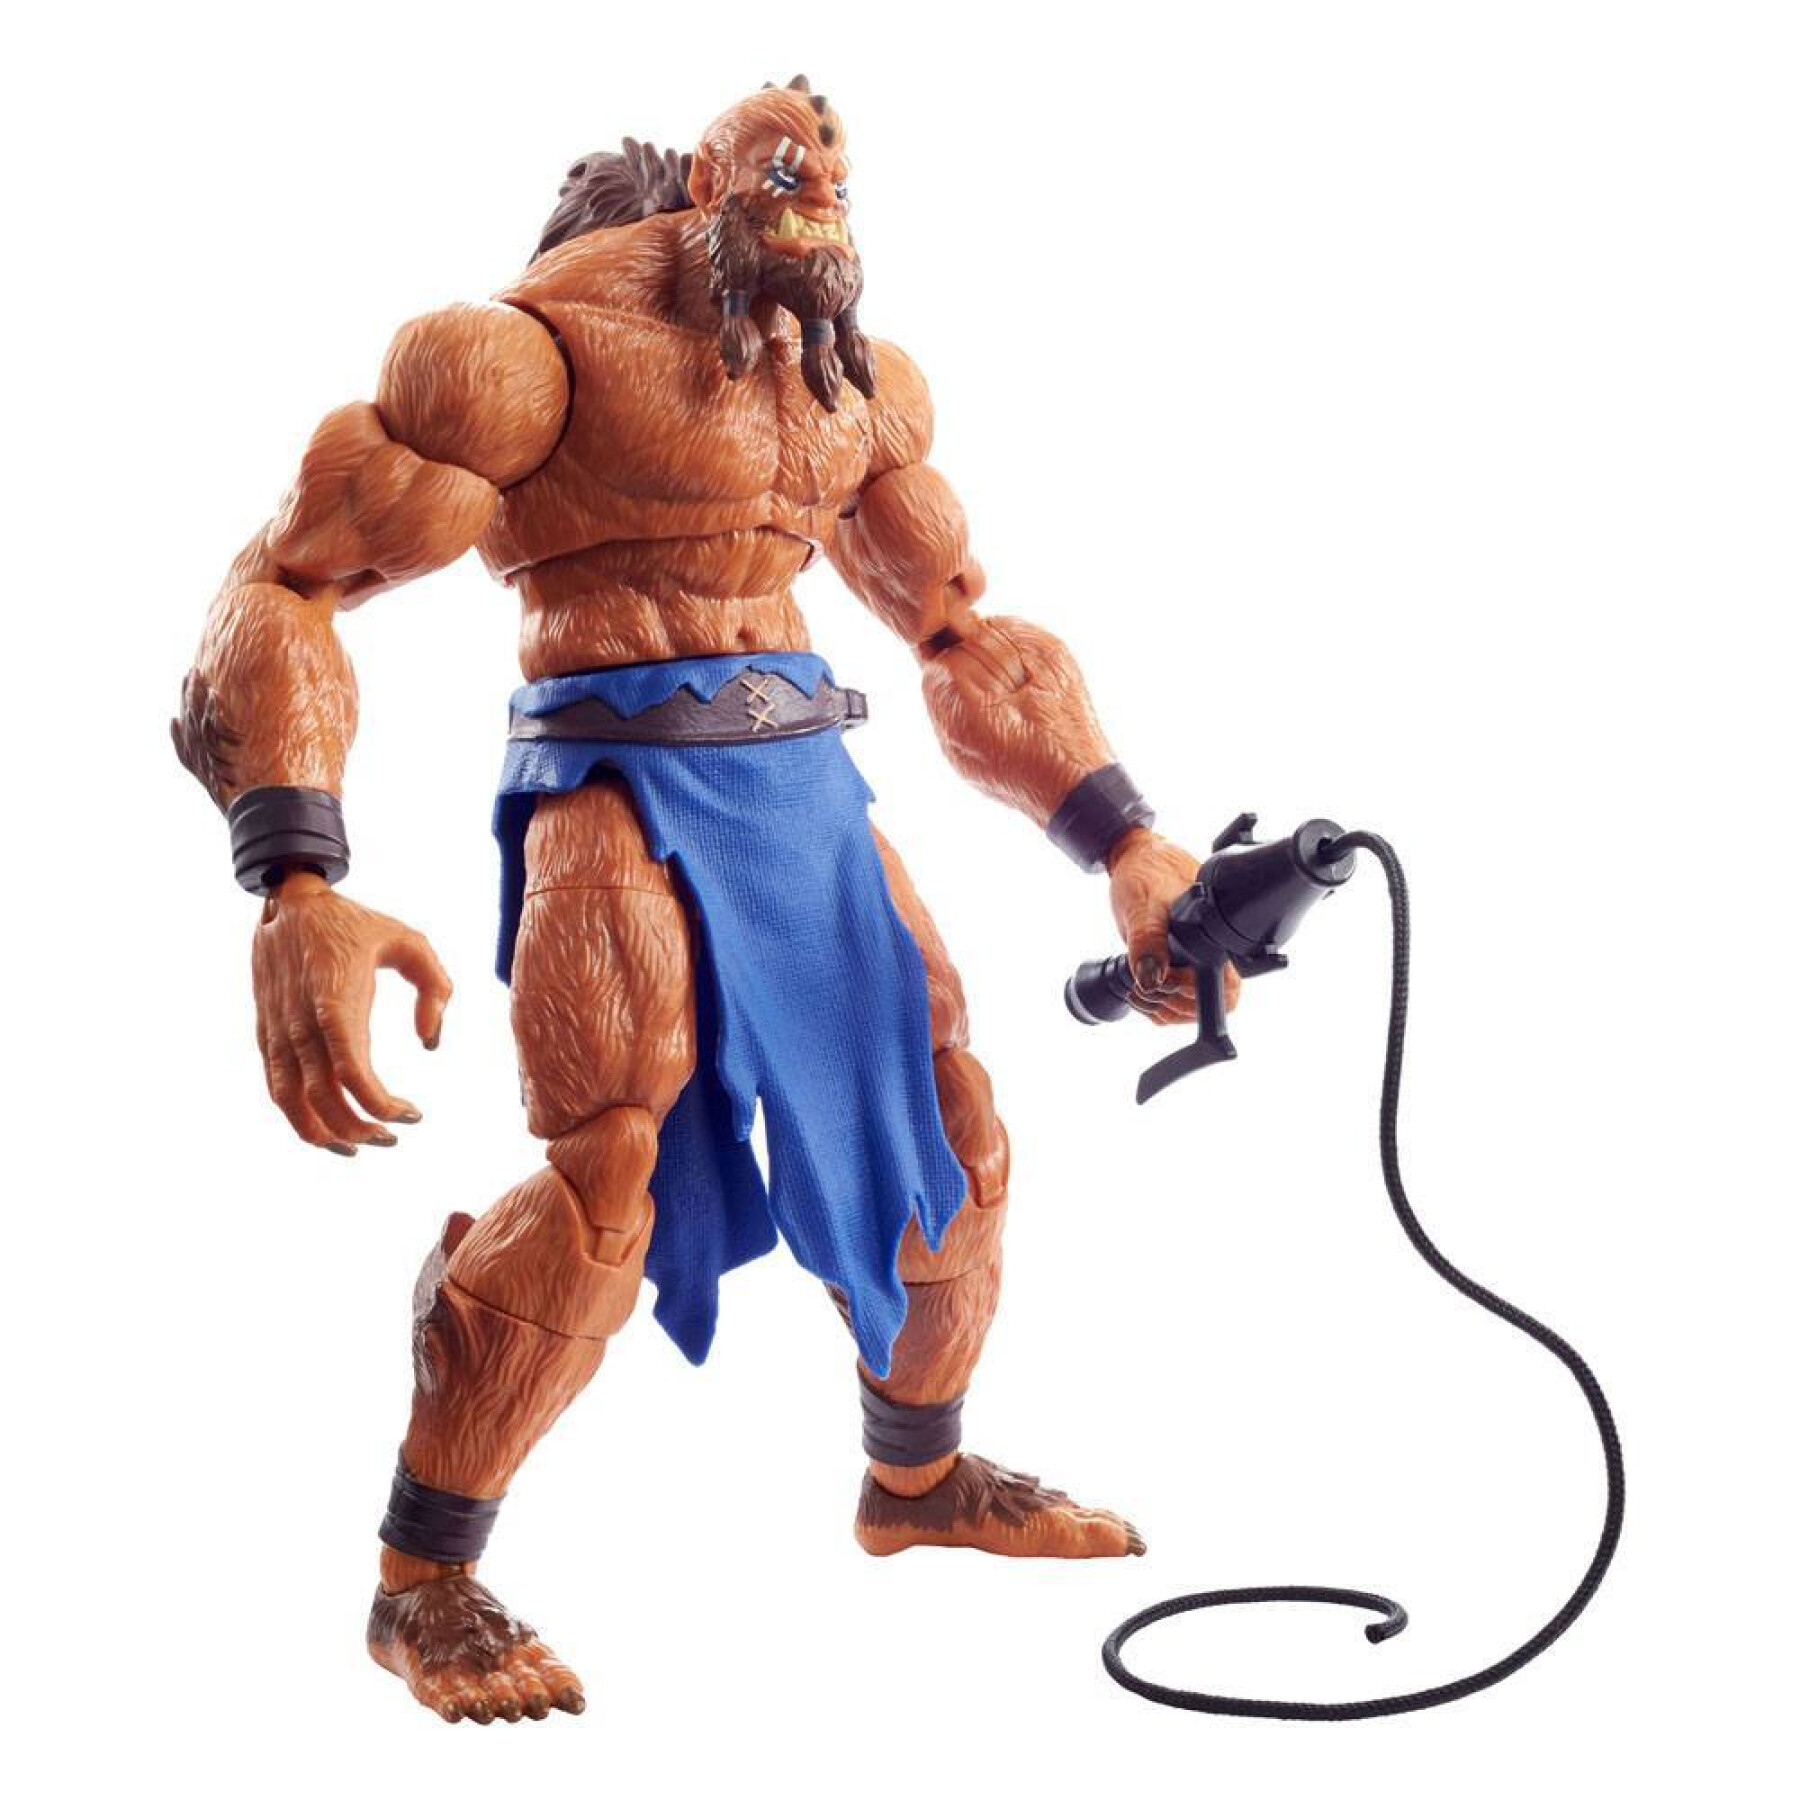 Figurina Mattel Masters Of The Universe: Revelation Masterverse 2021 Beast Man